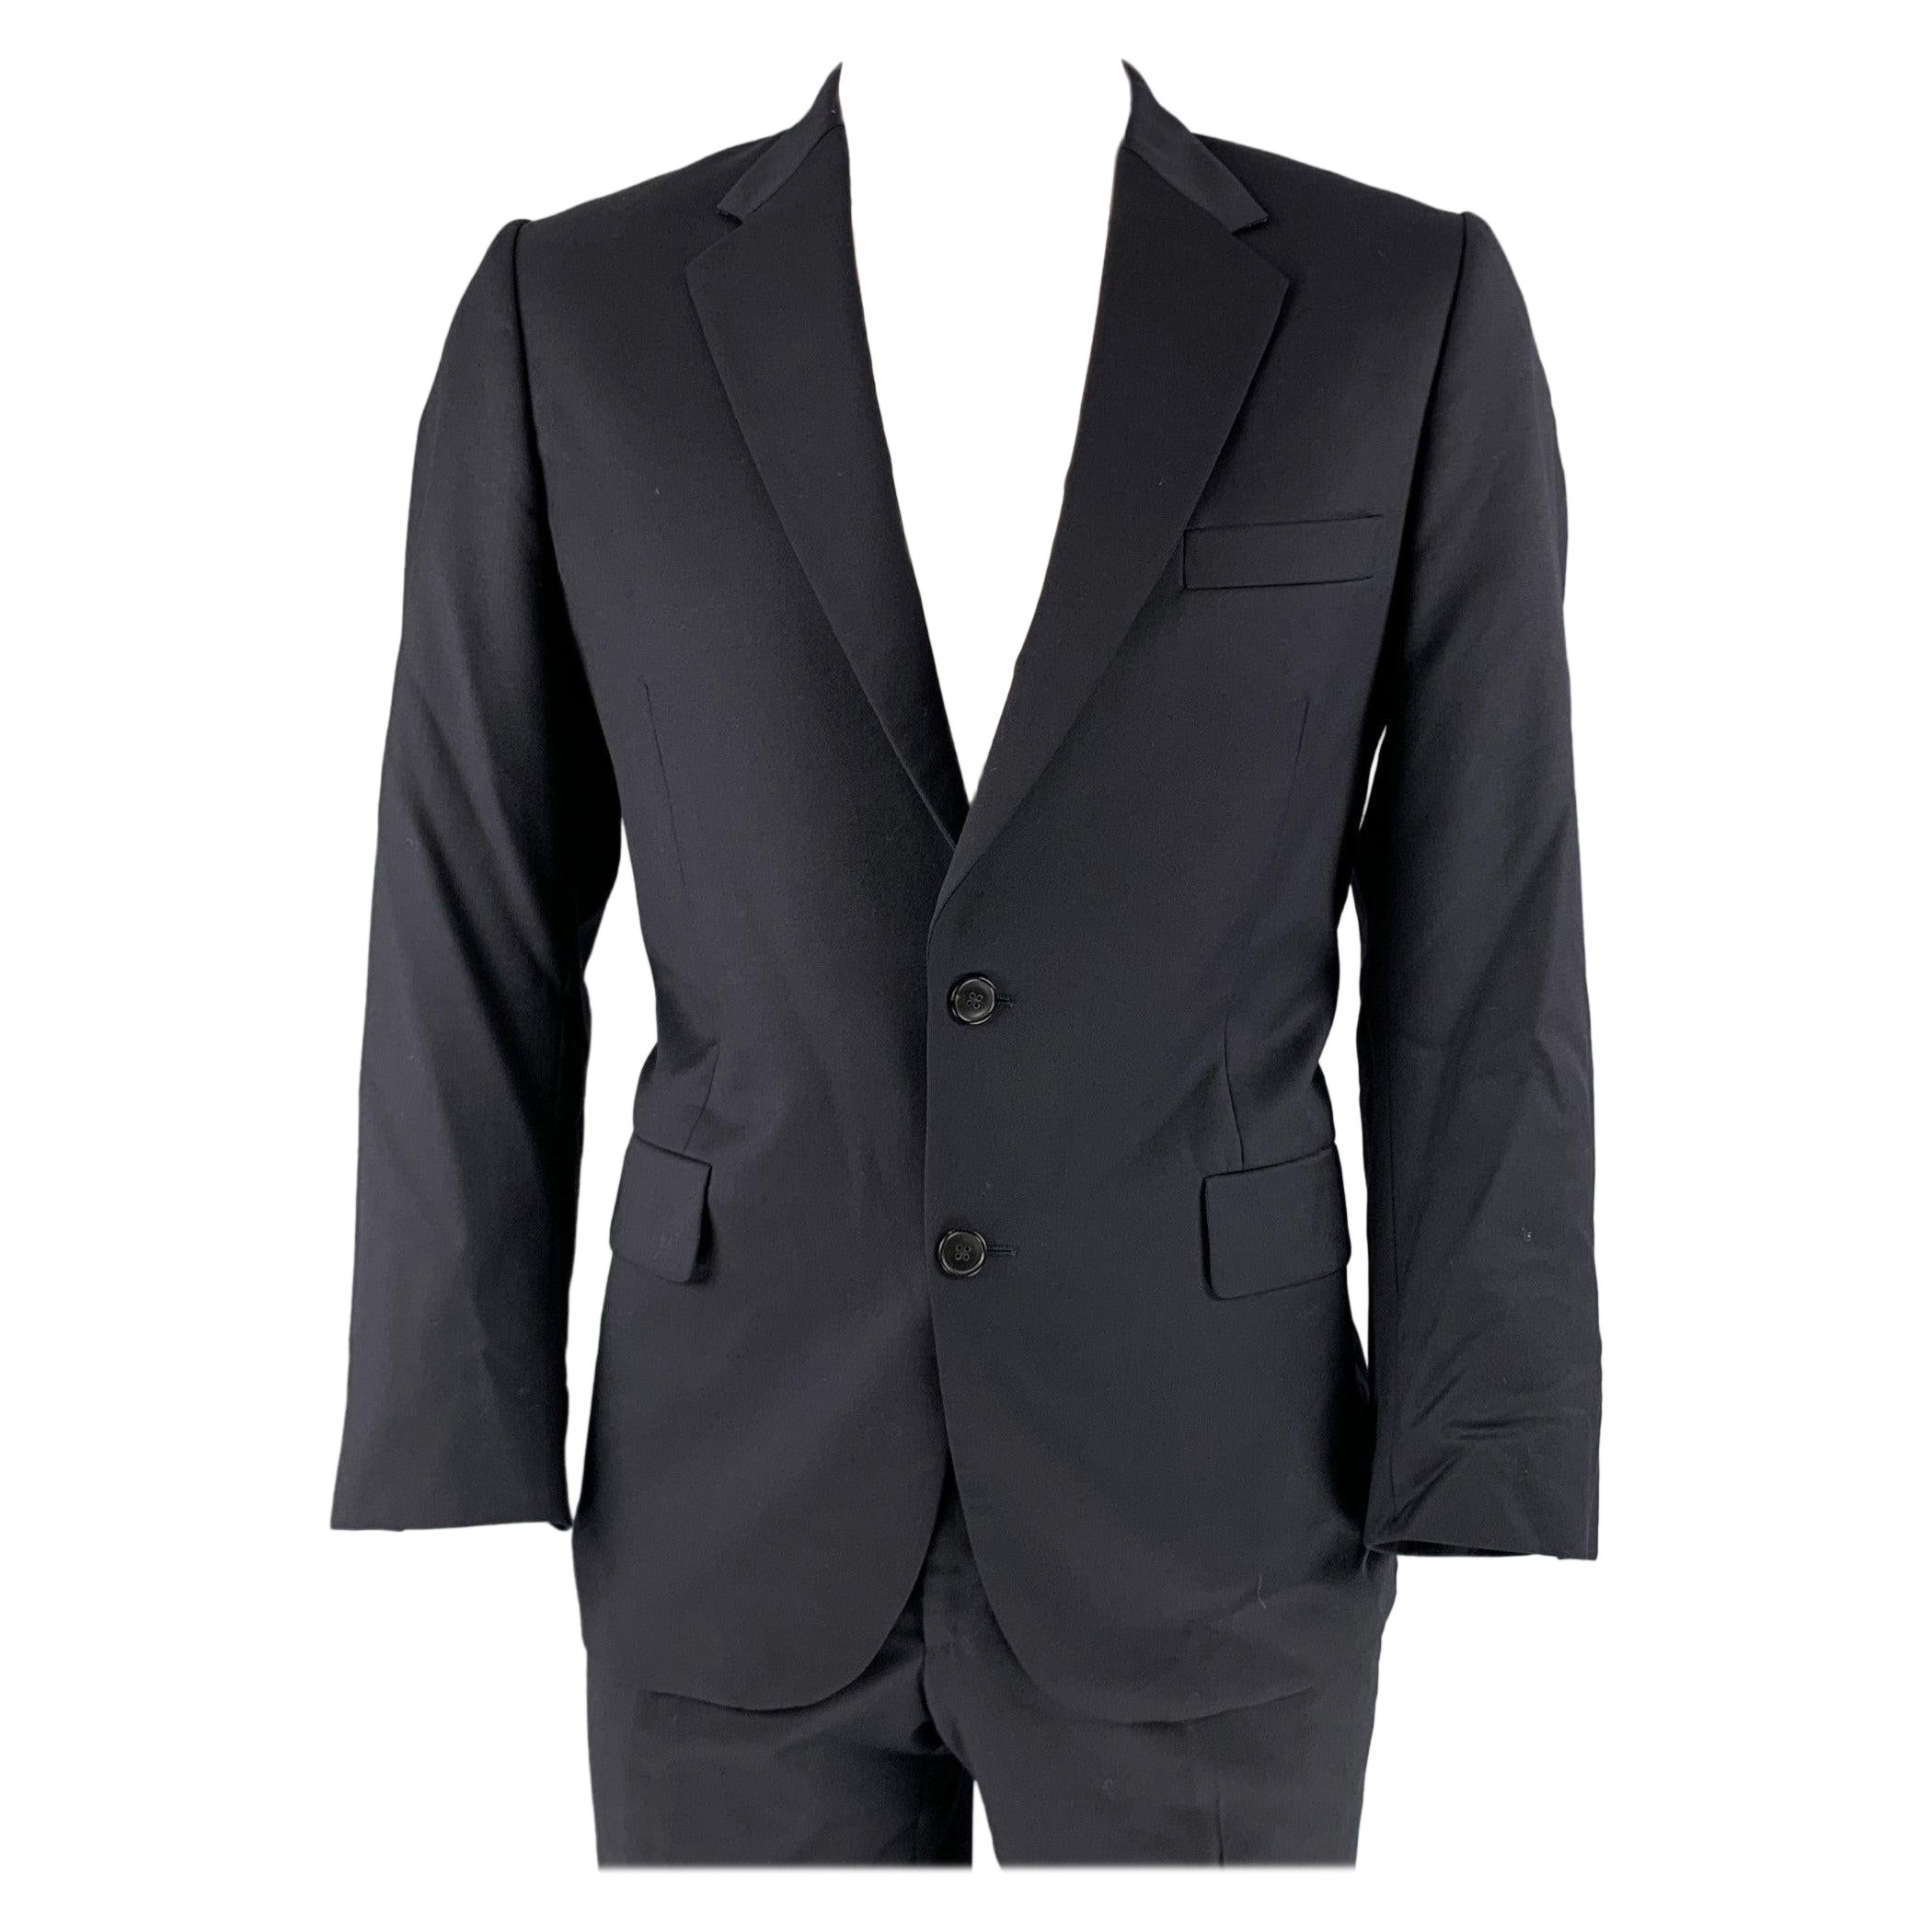 PAUL SMITH Size 42 Navy Wool Cashmere Notch Lapel Suit For Sale